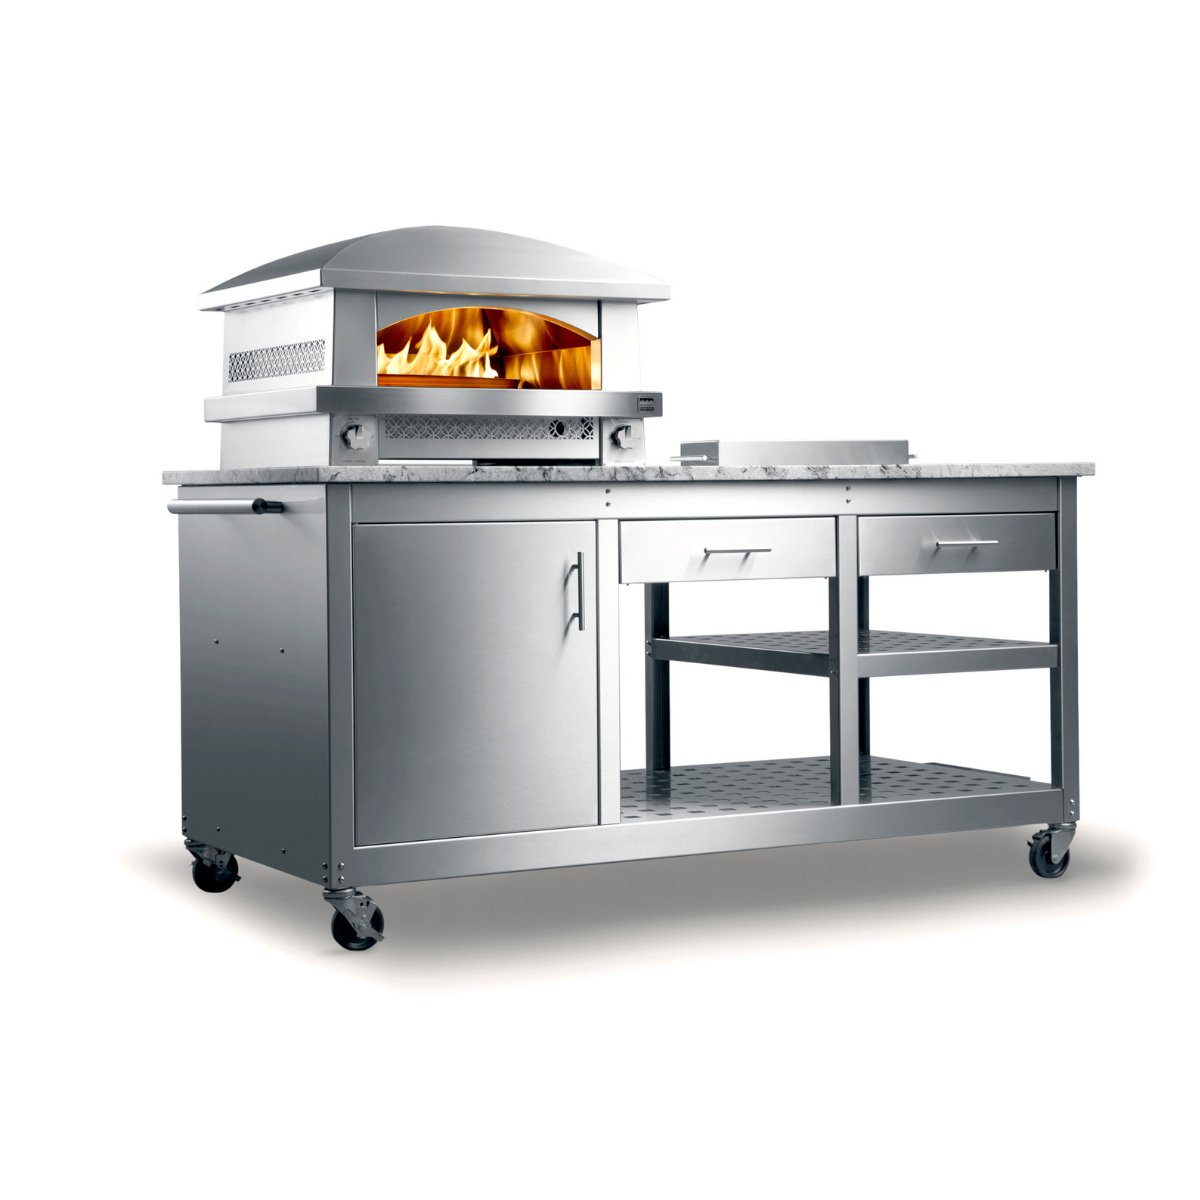 Kalamazoo Artisan Fire Pizza Oven - Freestanding - Kitchen In The Garden